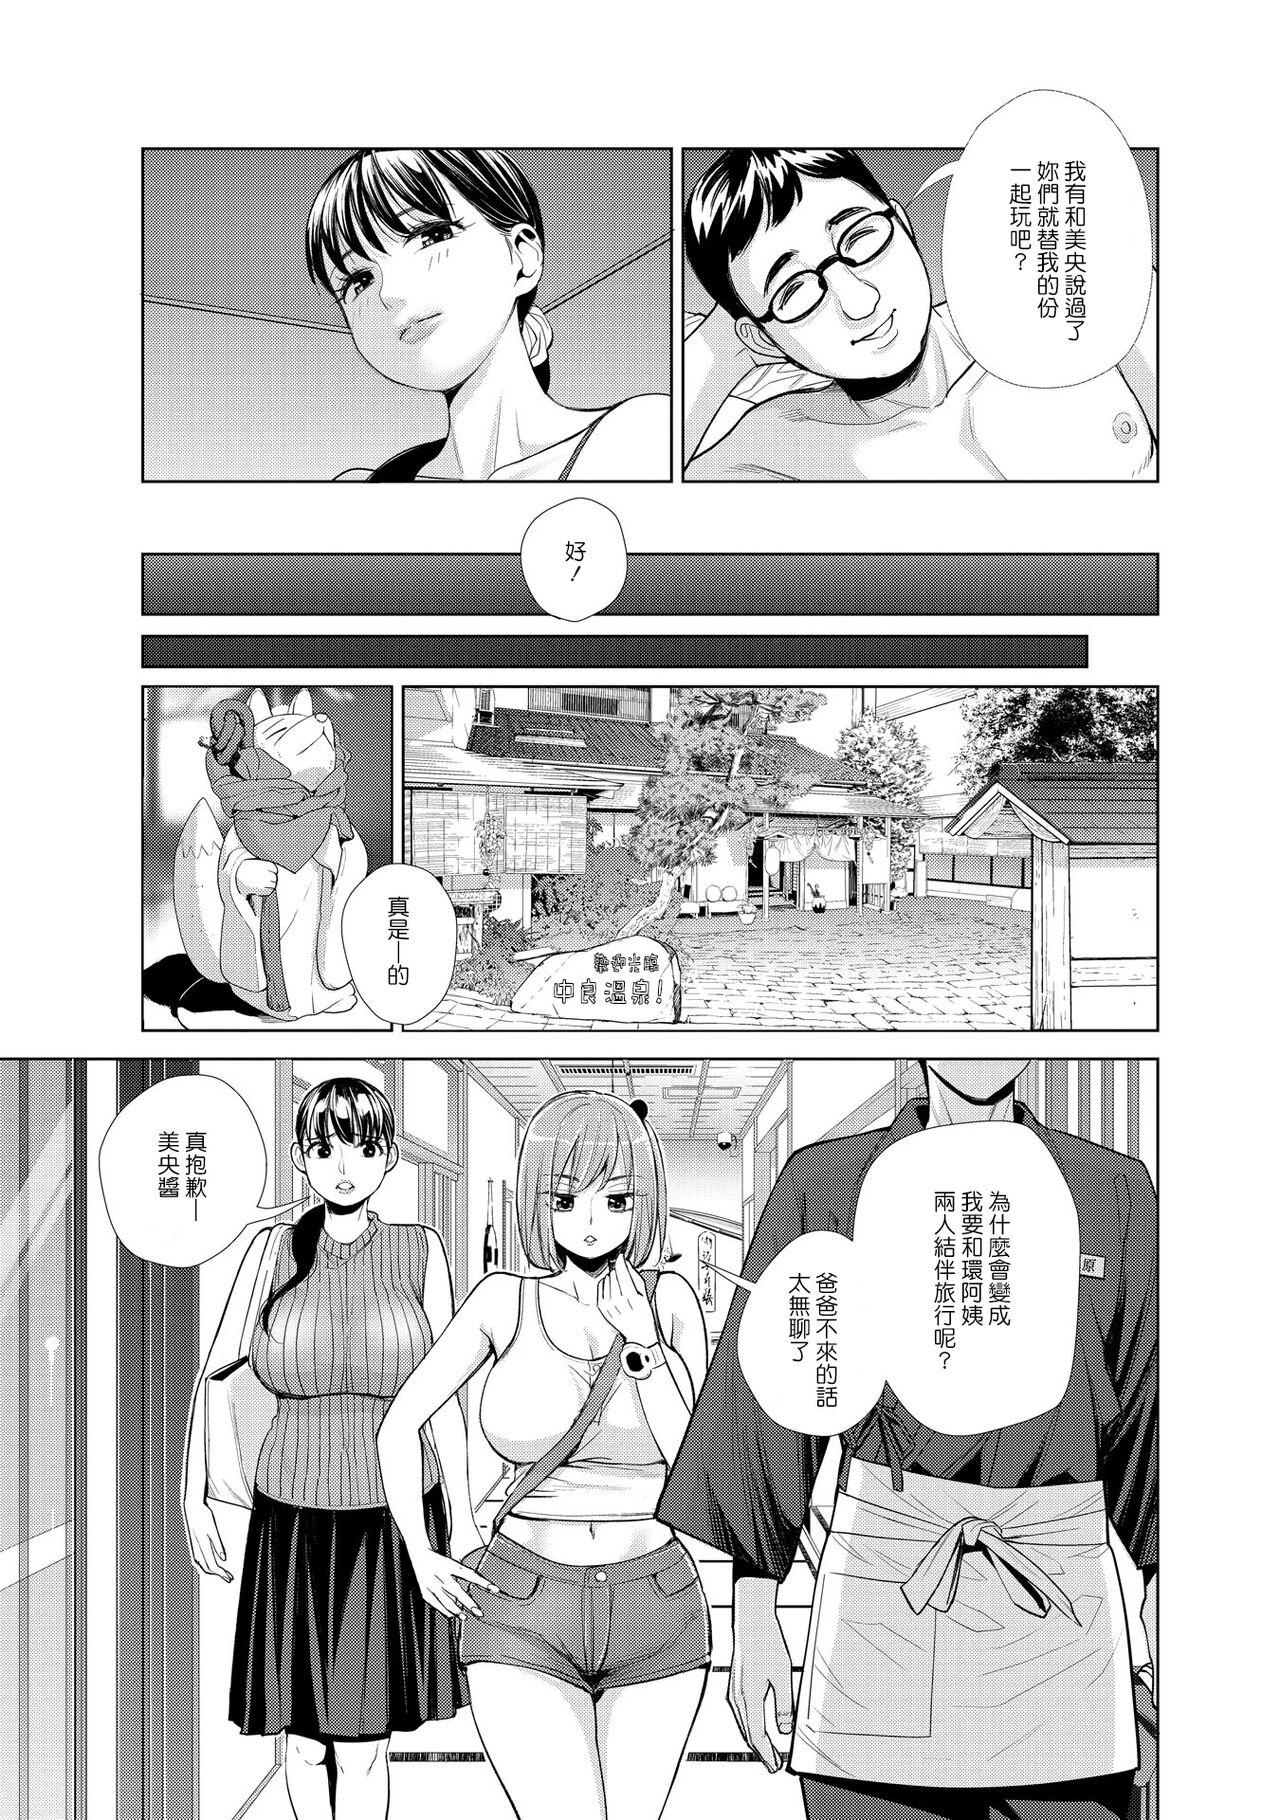 Threesome Nakayoku no yu e youkoso Muscles - Page 5